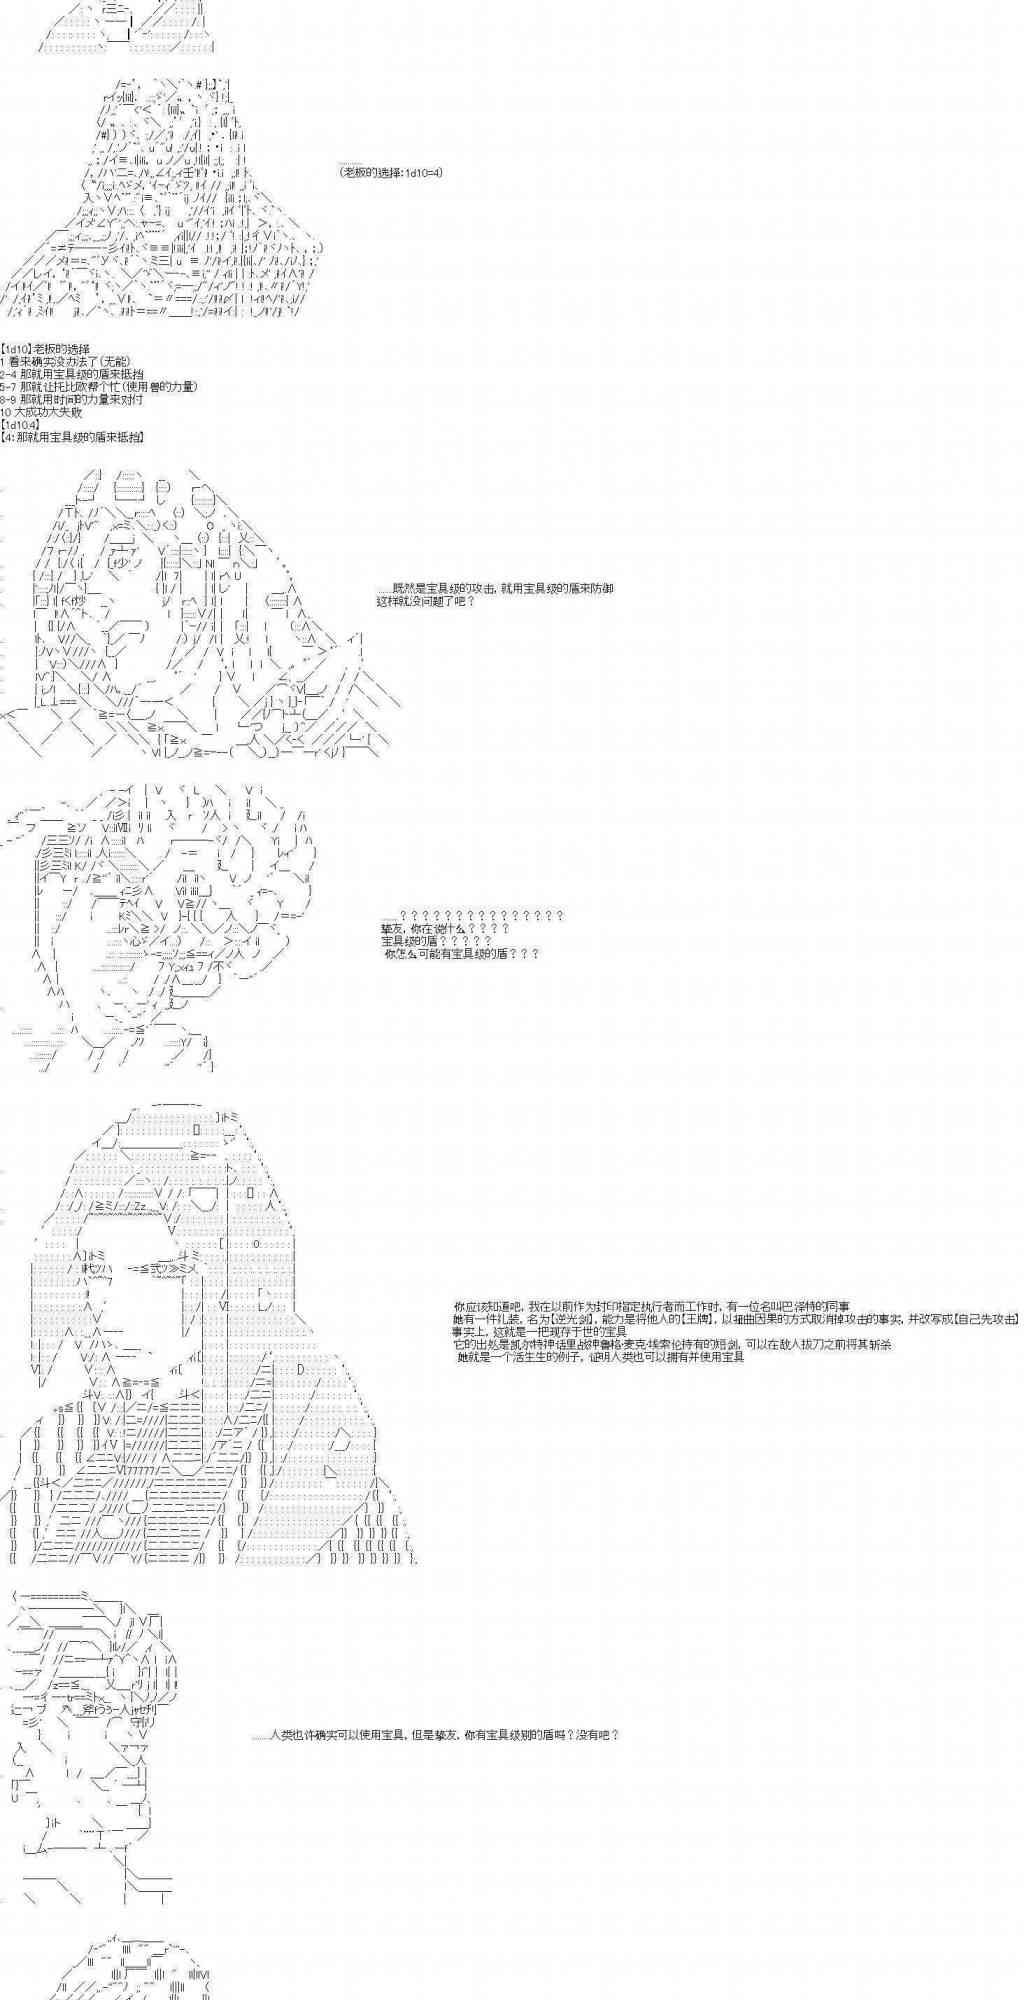 Fate/Grand Order-黃金精神的迪亞波羅正在拯救人理 - 6話(1/2) - 4